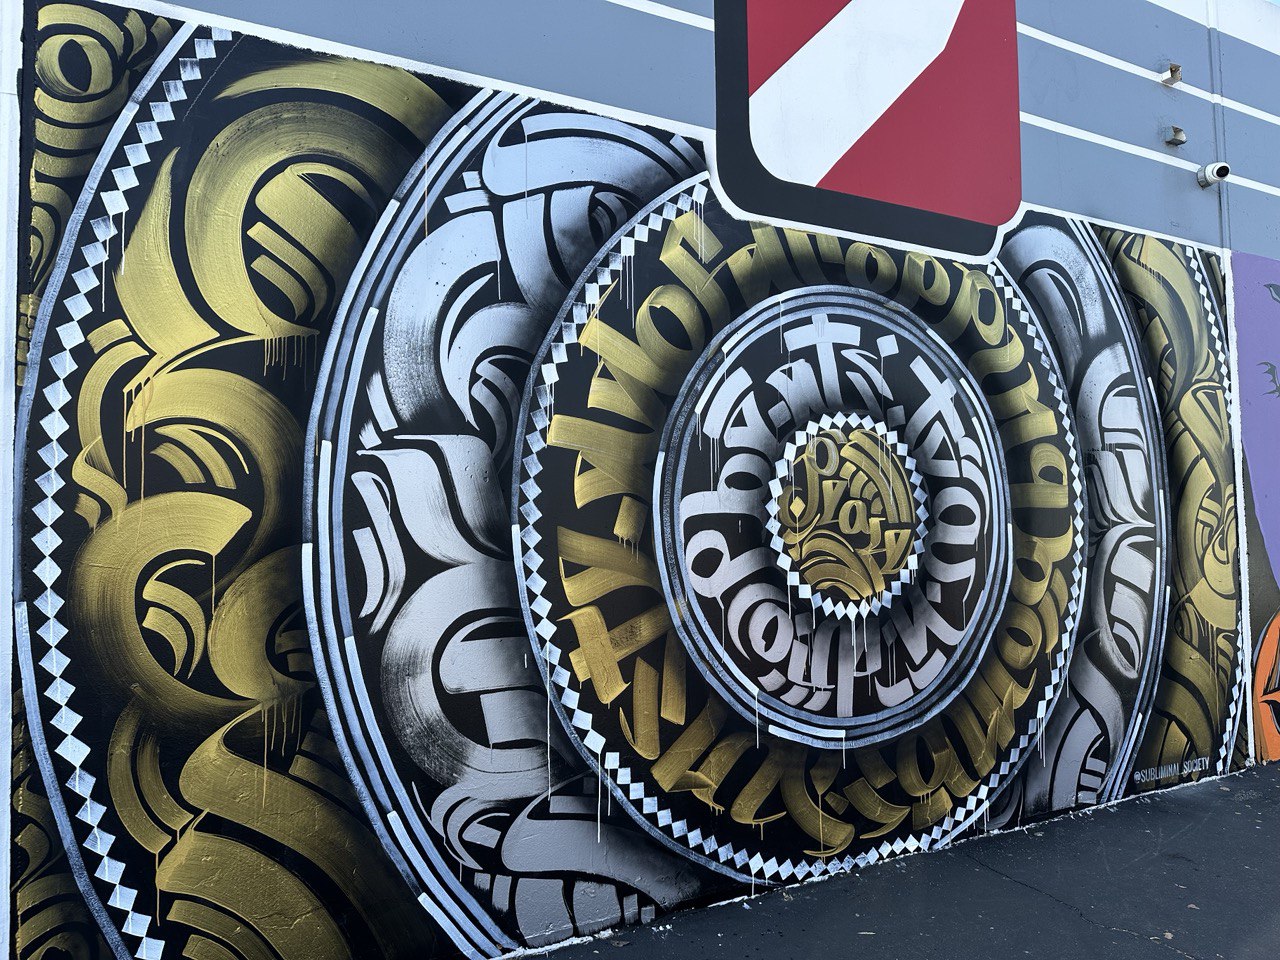 Mandala mural at Art Supply Warehouse by Zak Perez